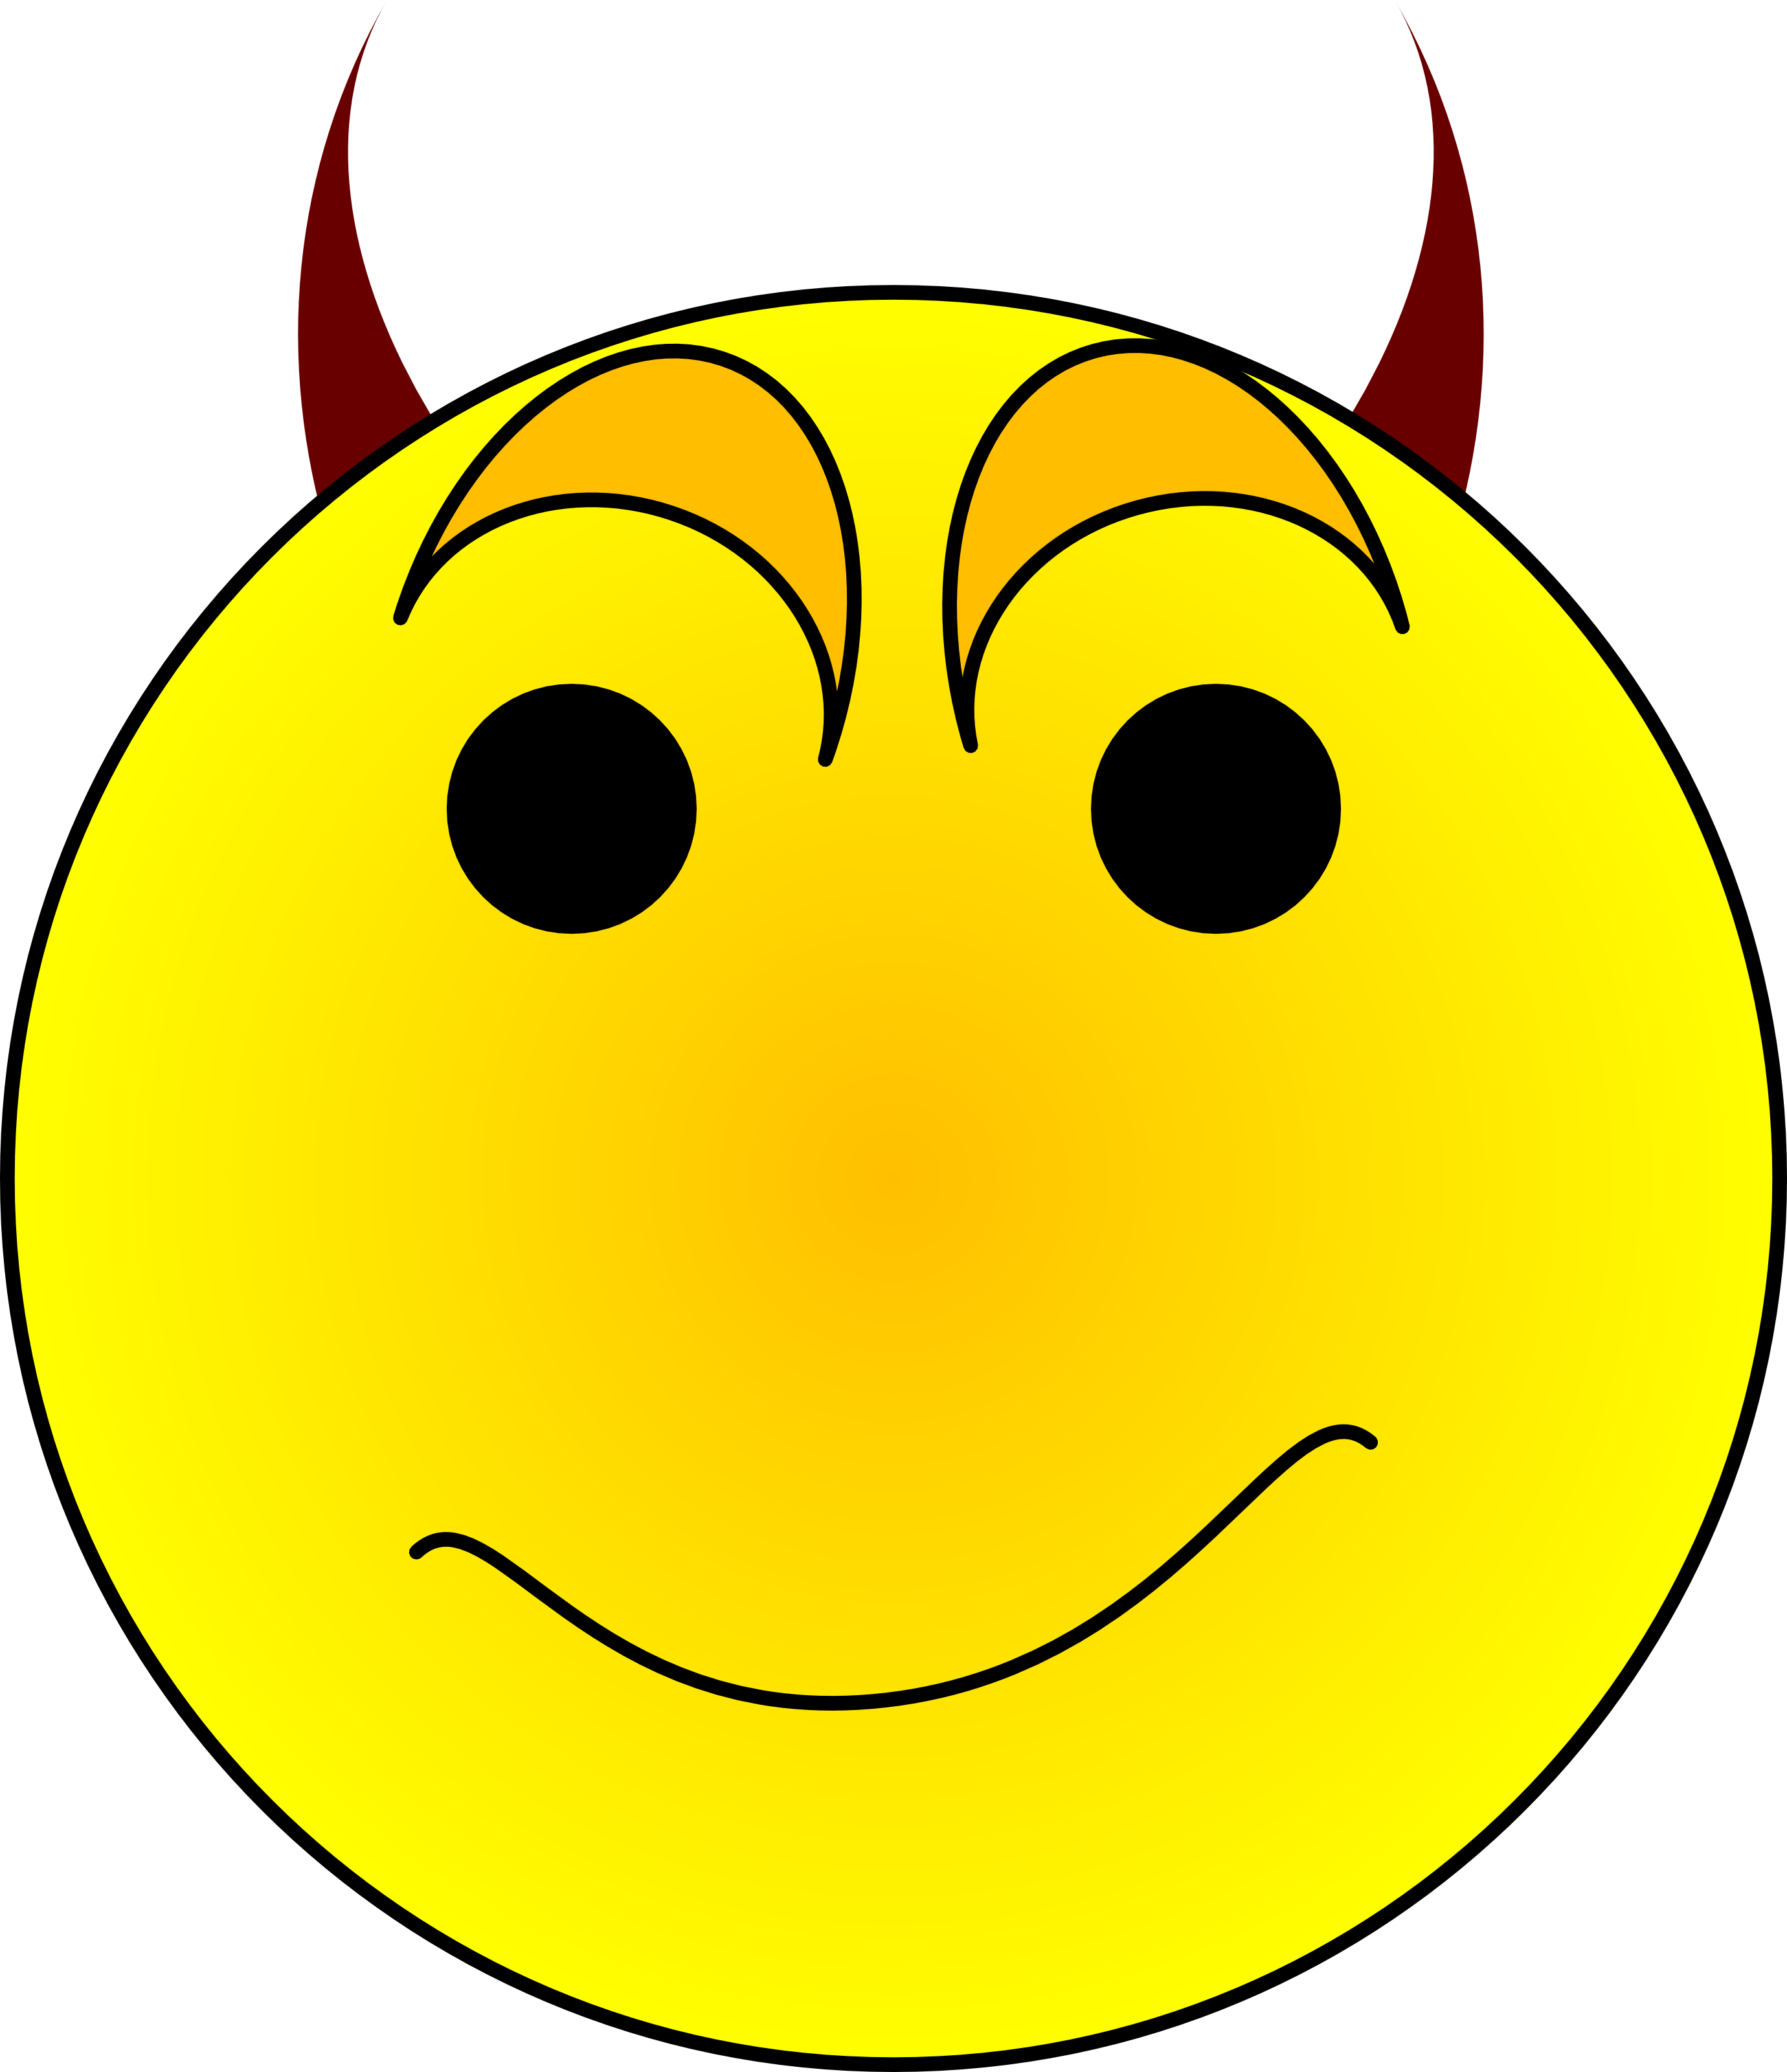 Smiley face clip art basic. Graphic free devil smajl